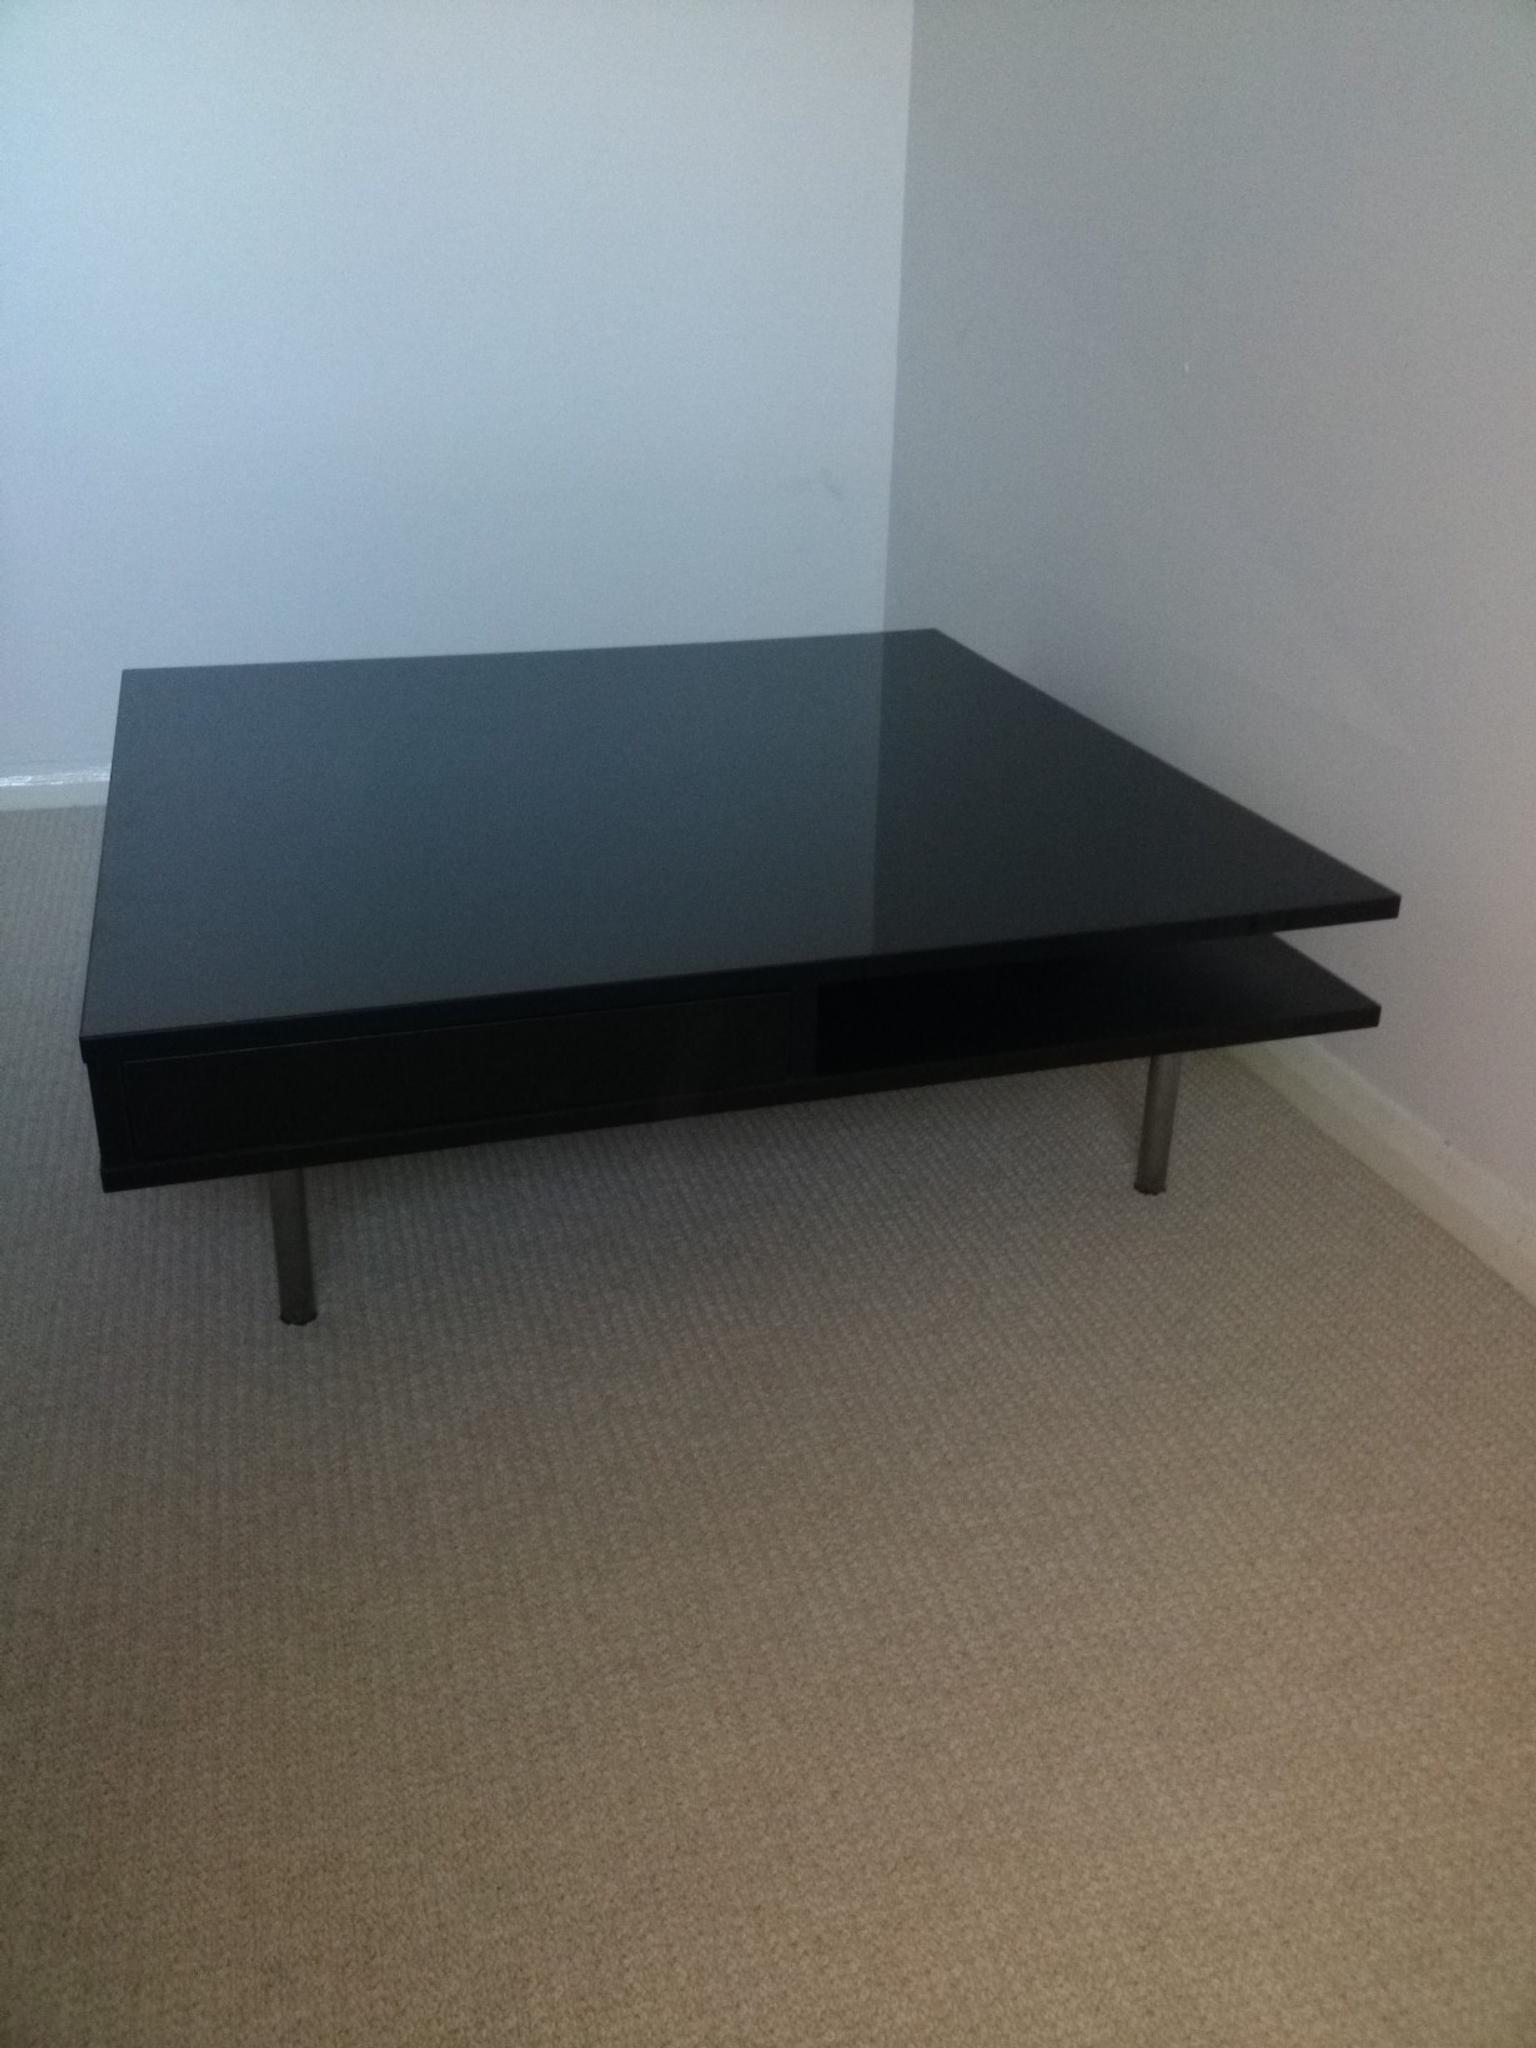 Ikea High Gloss Black Coffee Table In S25 Dinnington For 45 00